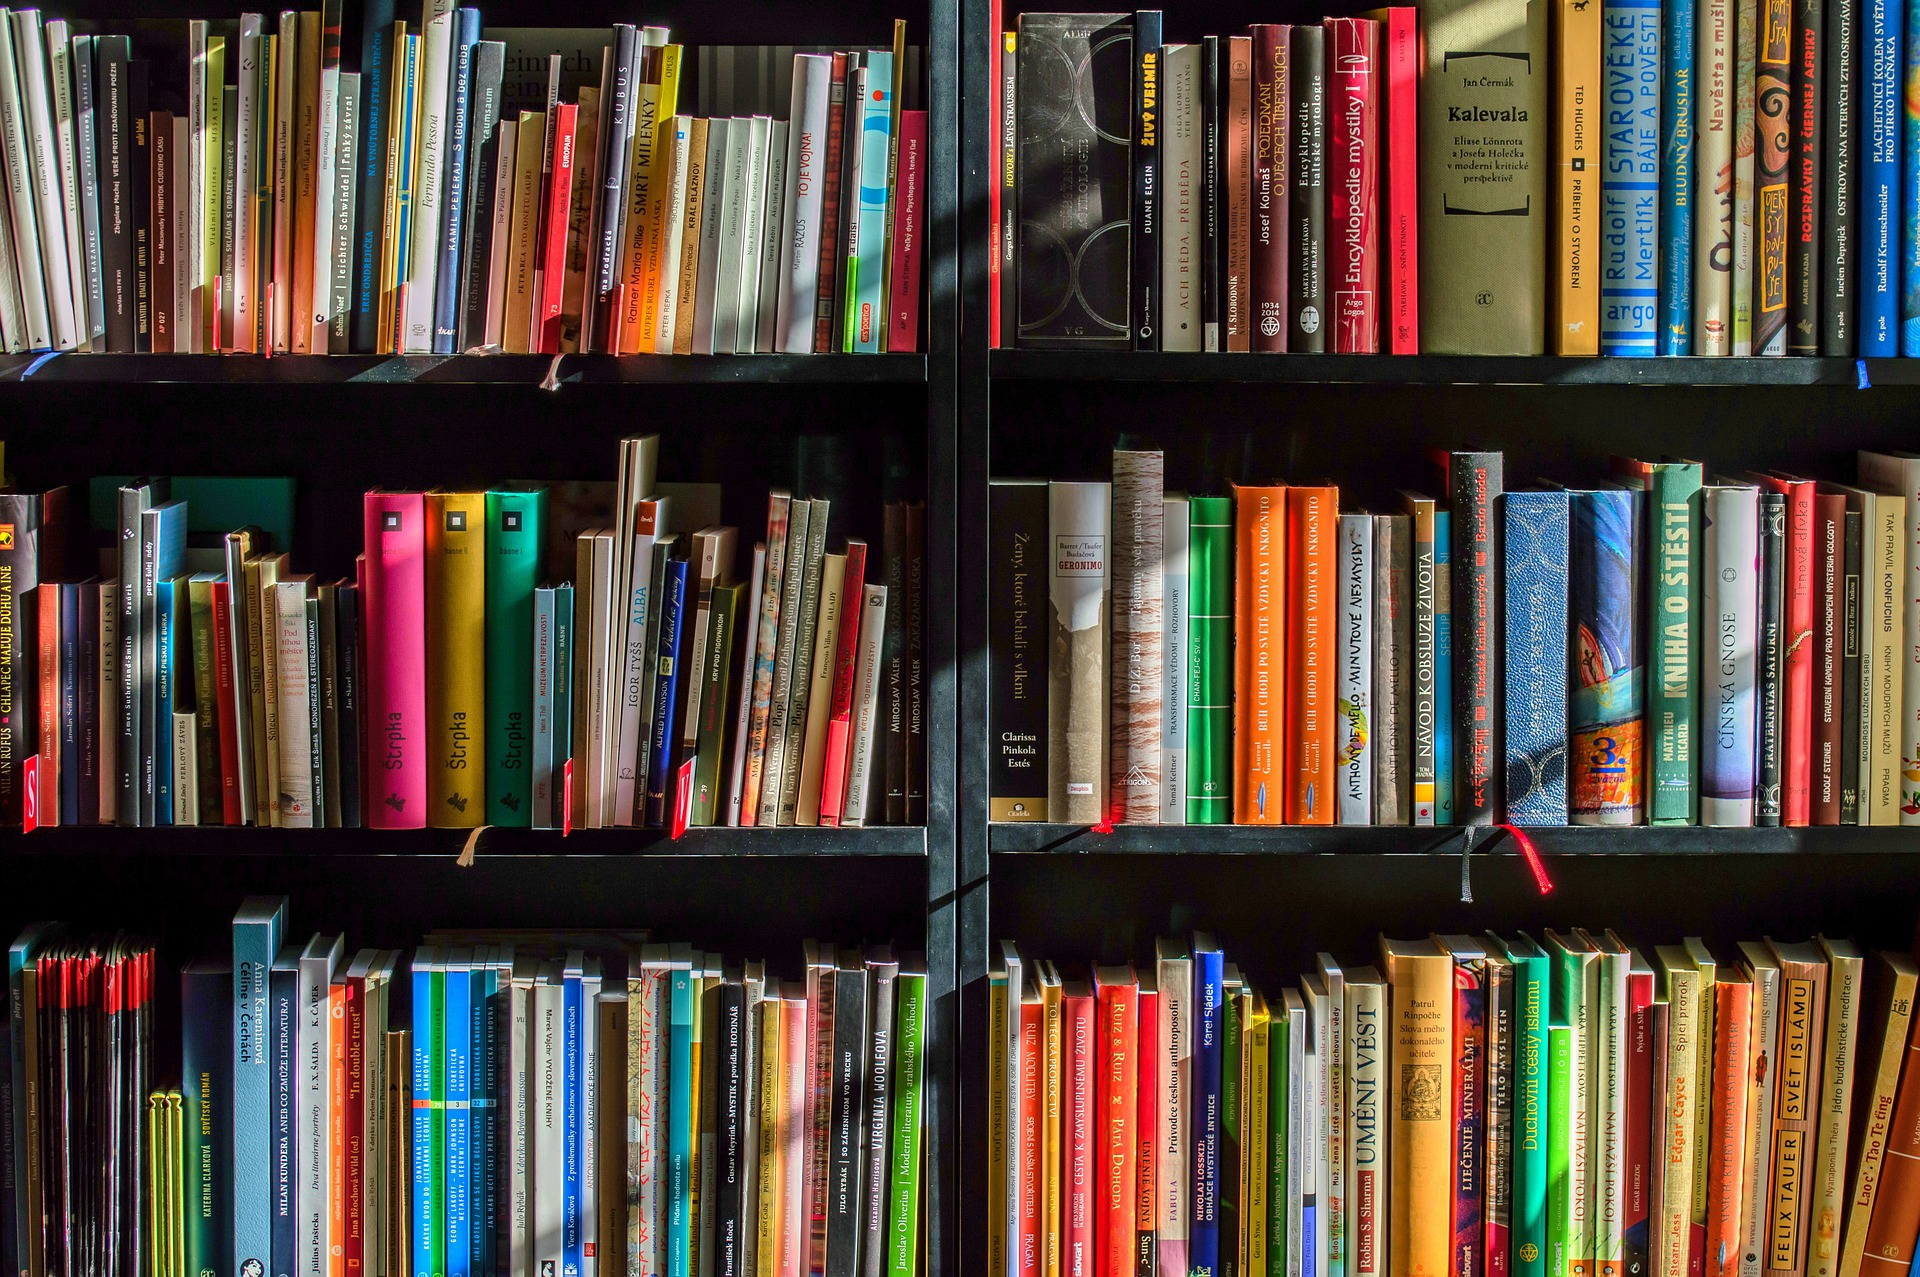                                                        book shelf image by: LubosHouska, source: pixabay